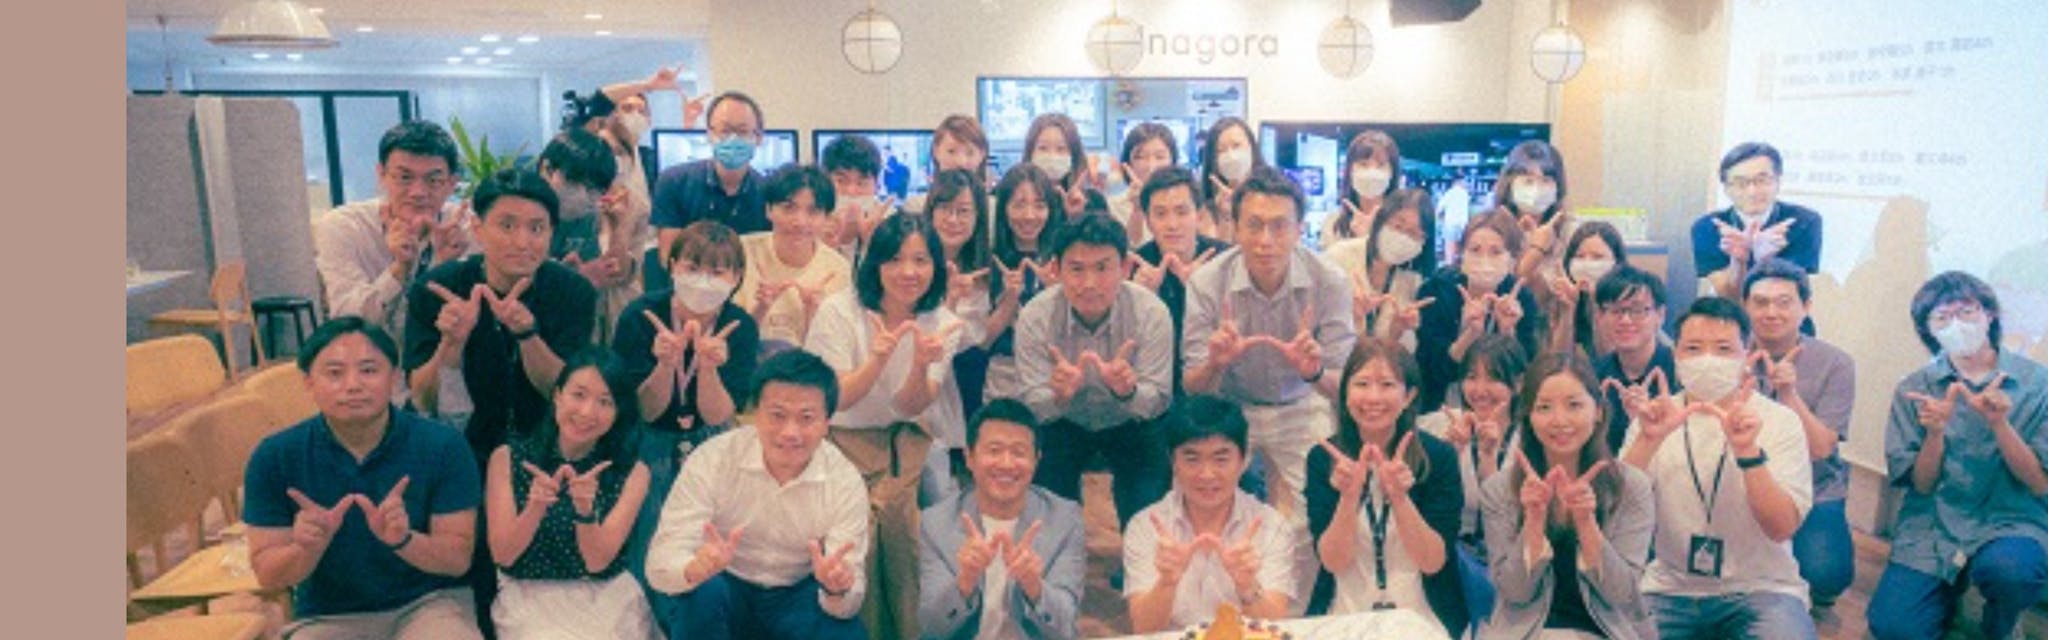 Inagoraホールディングス株式会社 - メイン画像